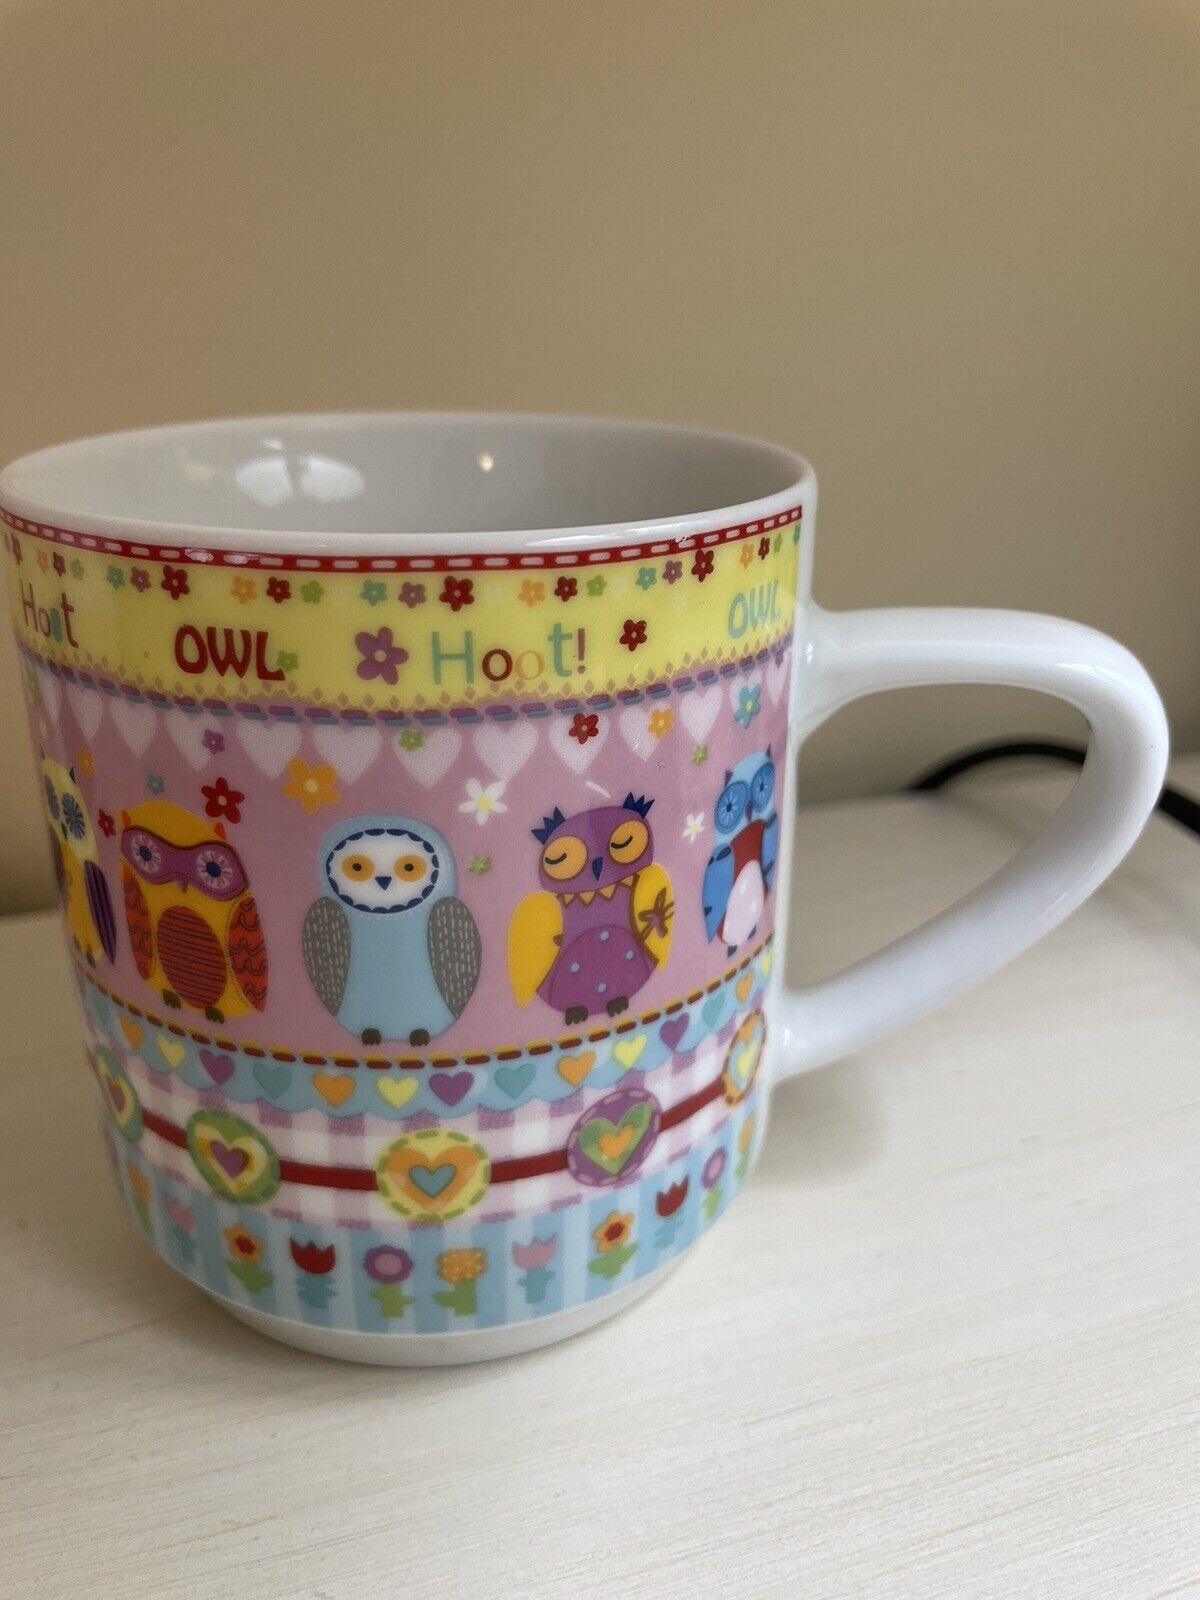 OWLS by Creative Tops Mug Coffee Tea Cup HOOT - 14 oz capacity - NWOT